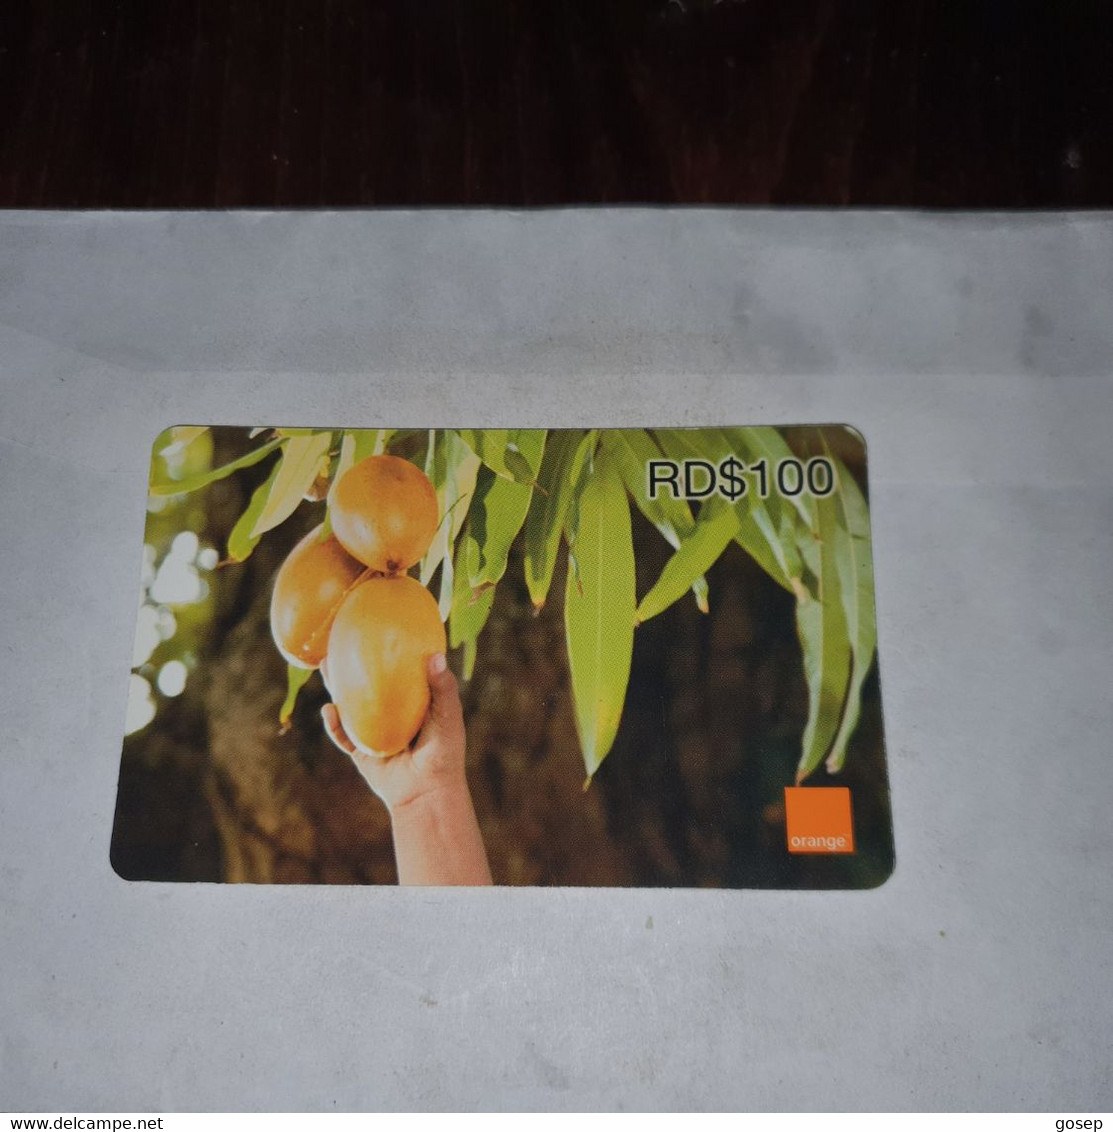 Dominicana-(orange-28rd$100)-(1786-7483-7831-62)-three Mango-(27)-(31.12.2009)-used Card+1card Prepiad Free - Dominicaine